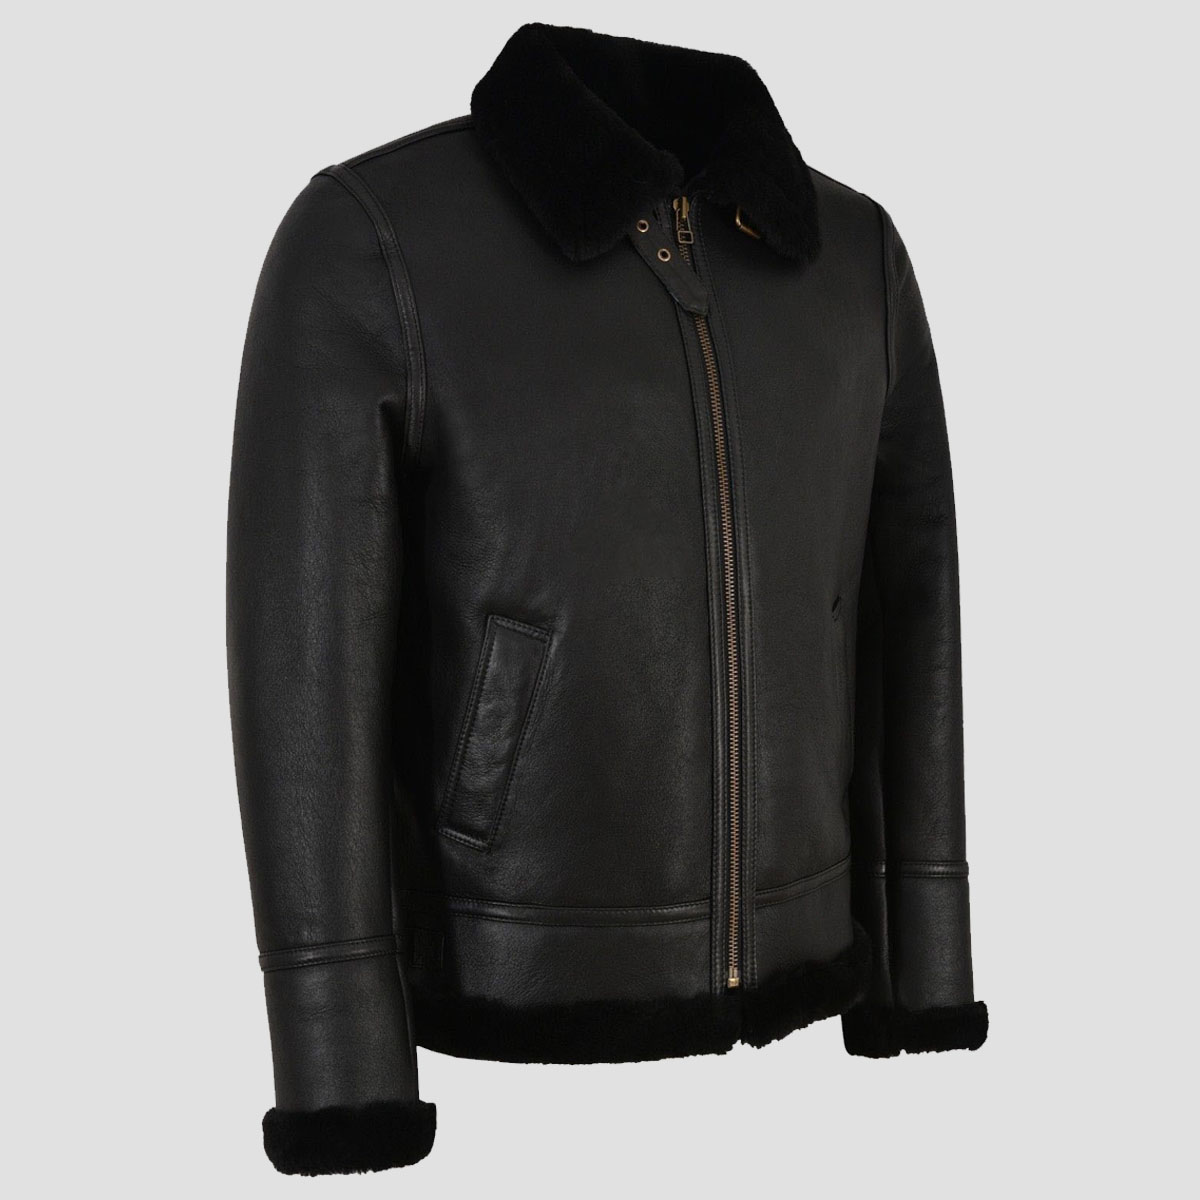 B-3 Shearling Black Leather Bomber Jacket - The Vintage Leather